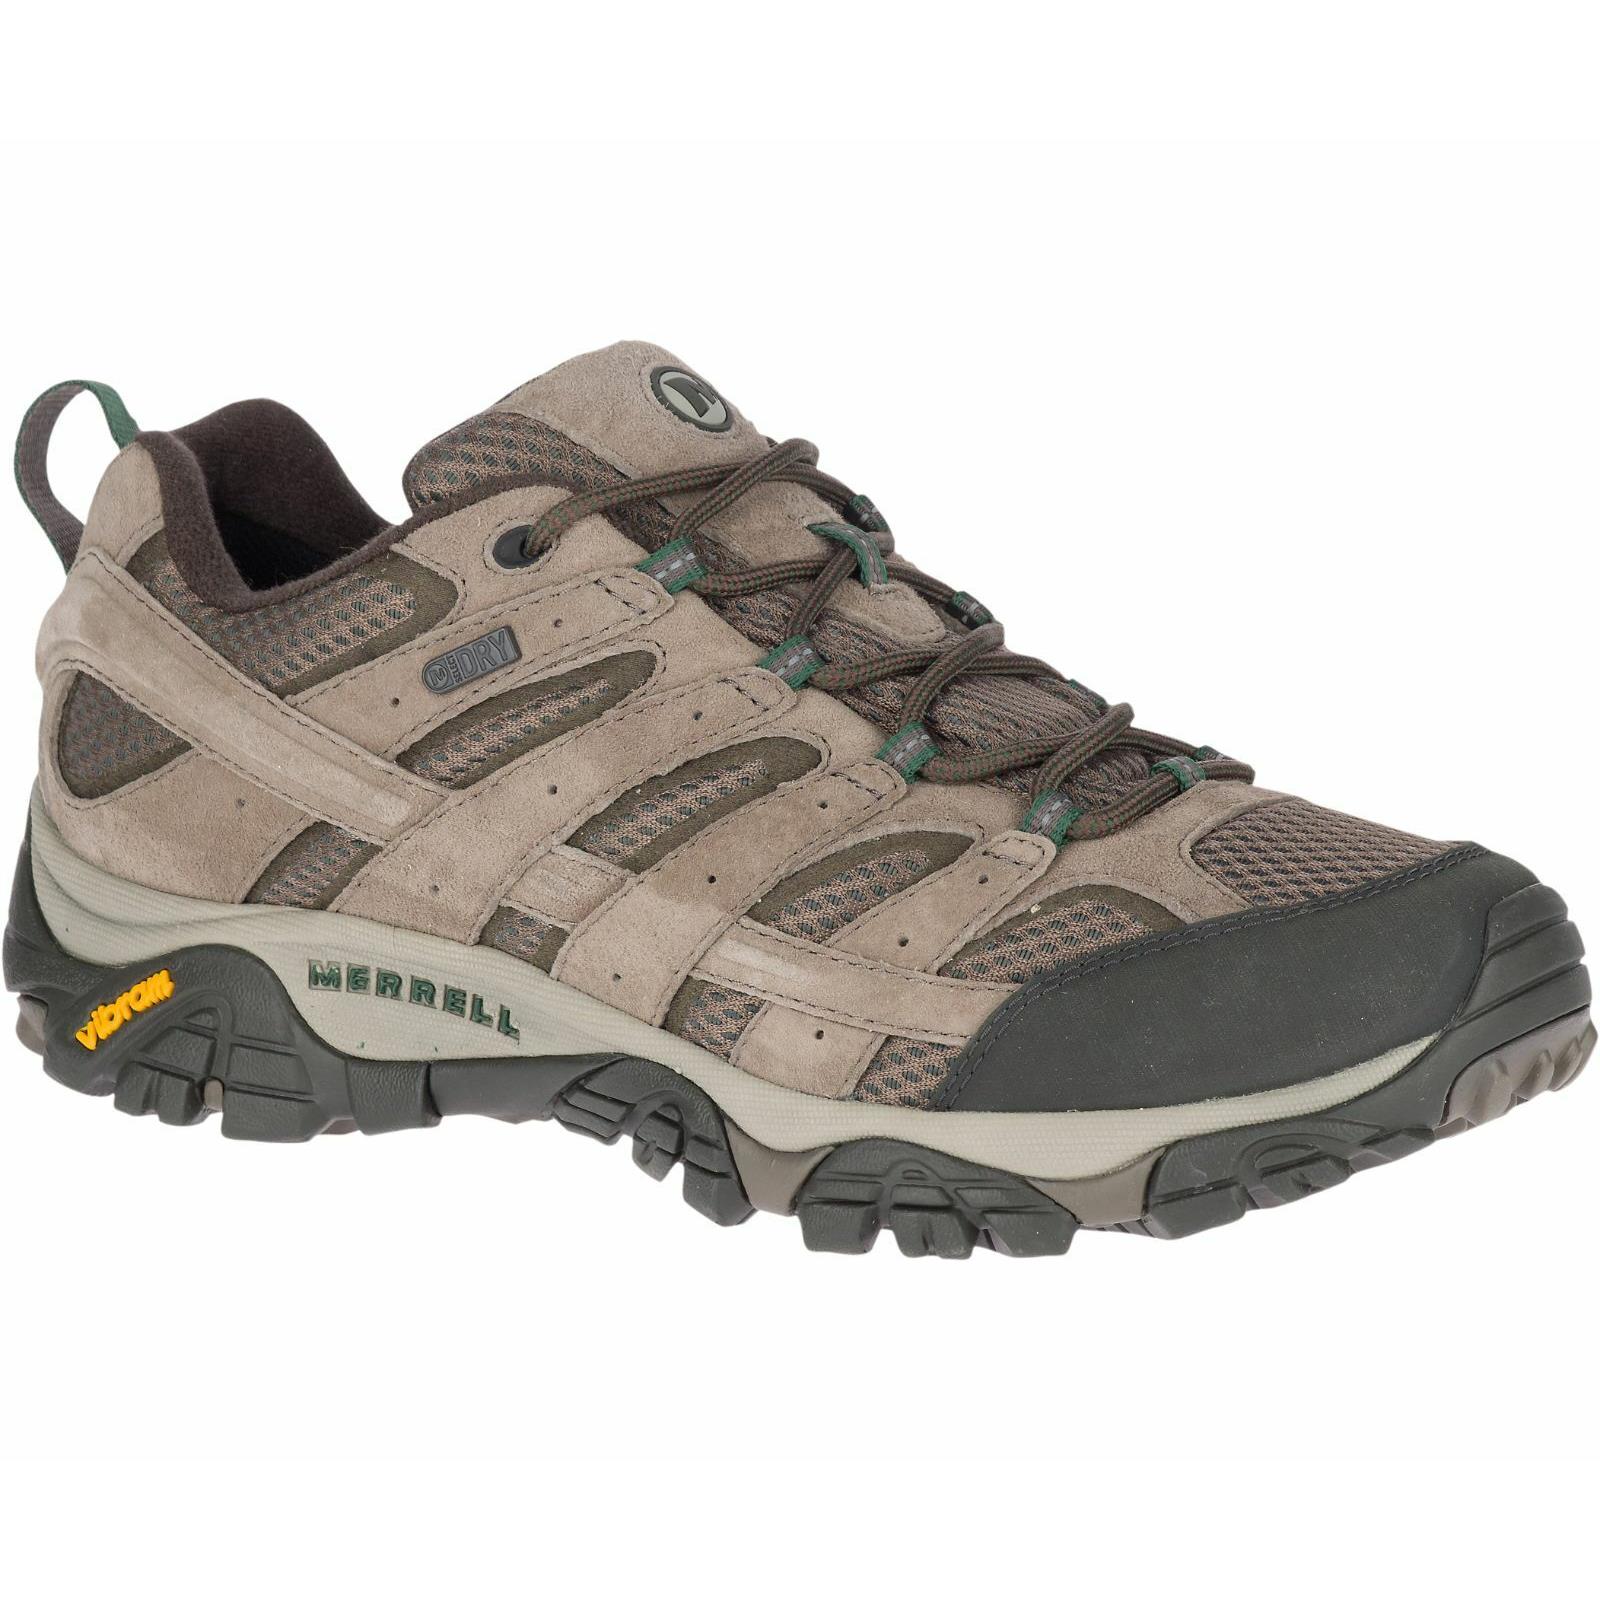 Merrell Men`s Waterproof Shock Absorbing Moisture Wicking Hiking Leather Shoes Boulder